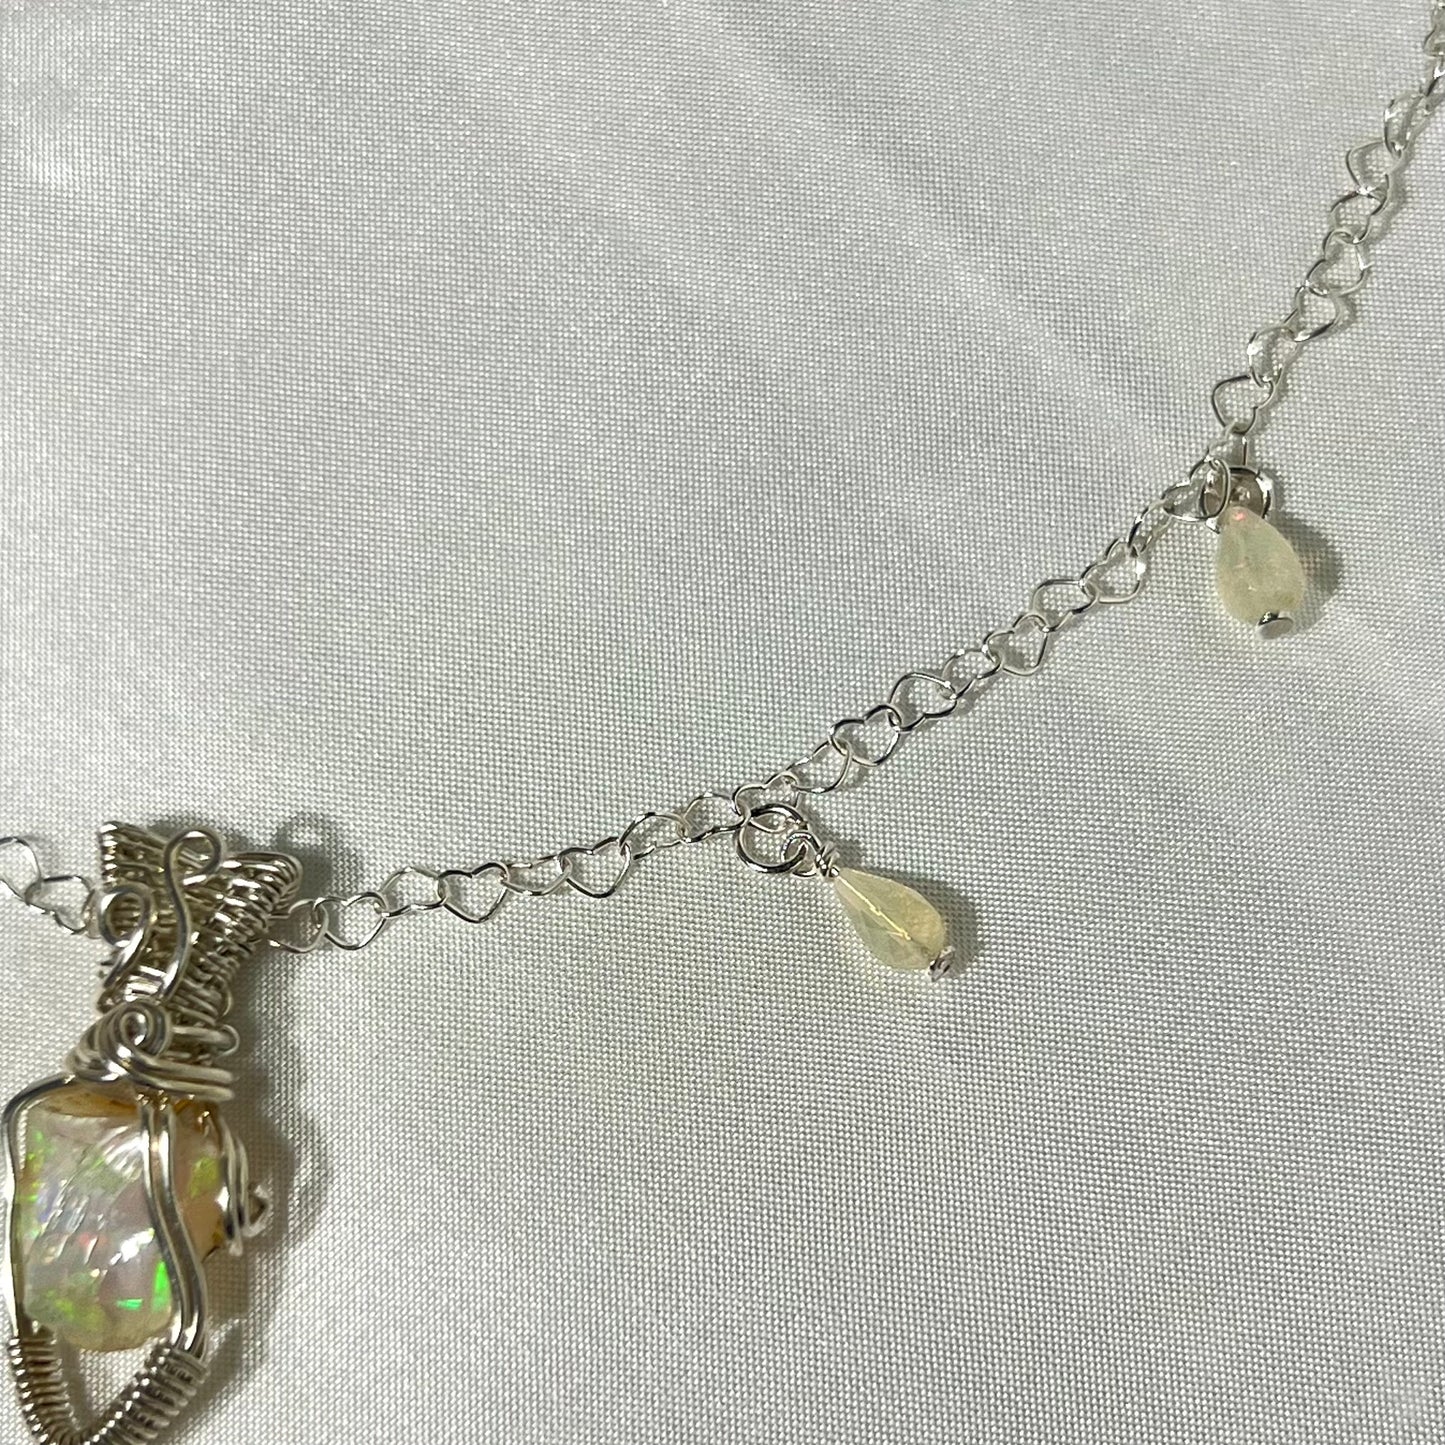 Heartfelt Opal Necklace *a* ss